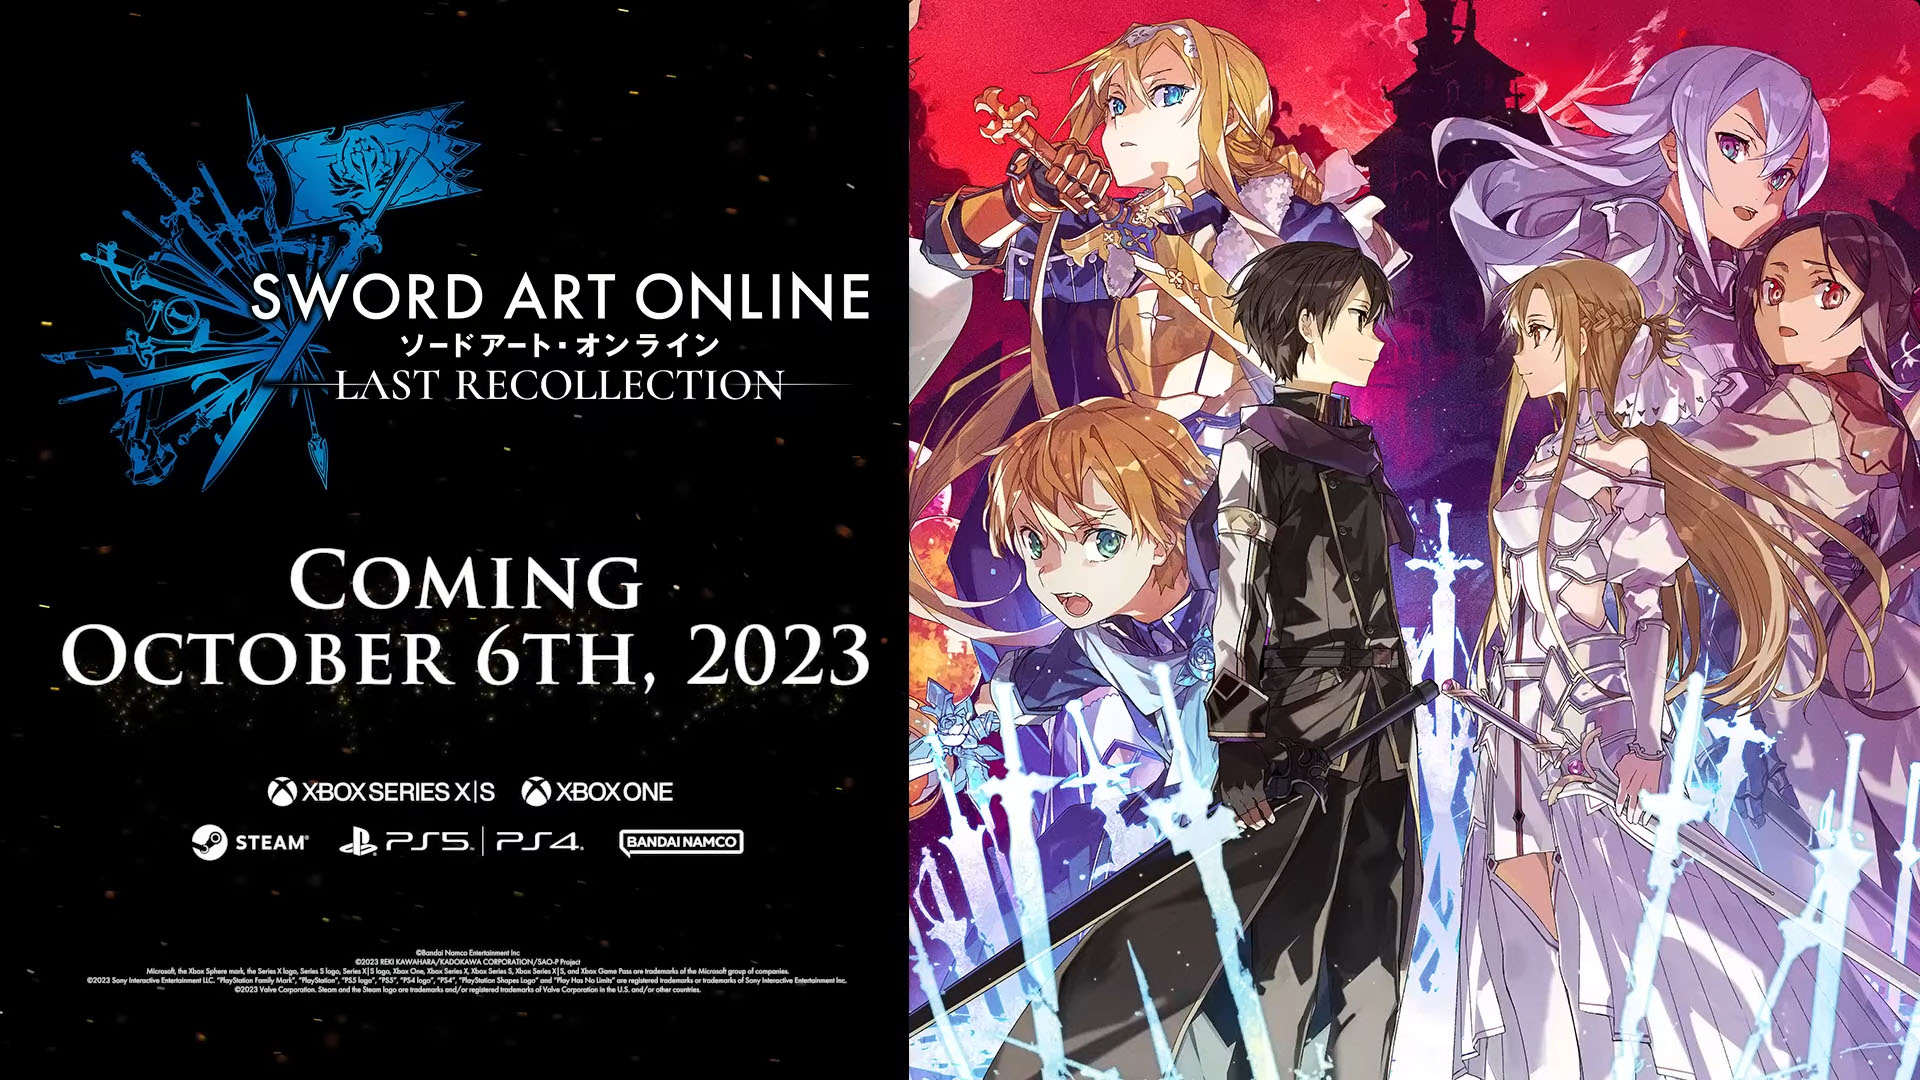 Sword Art Online: Last Recollection launches October 5 in Japan